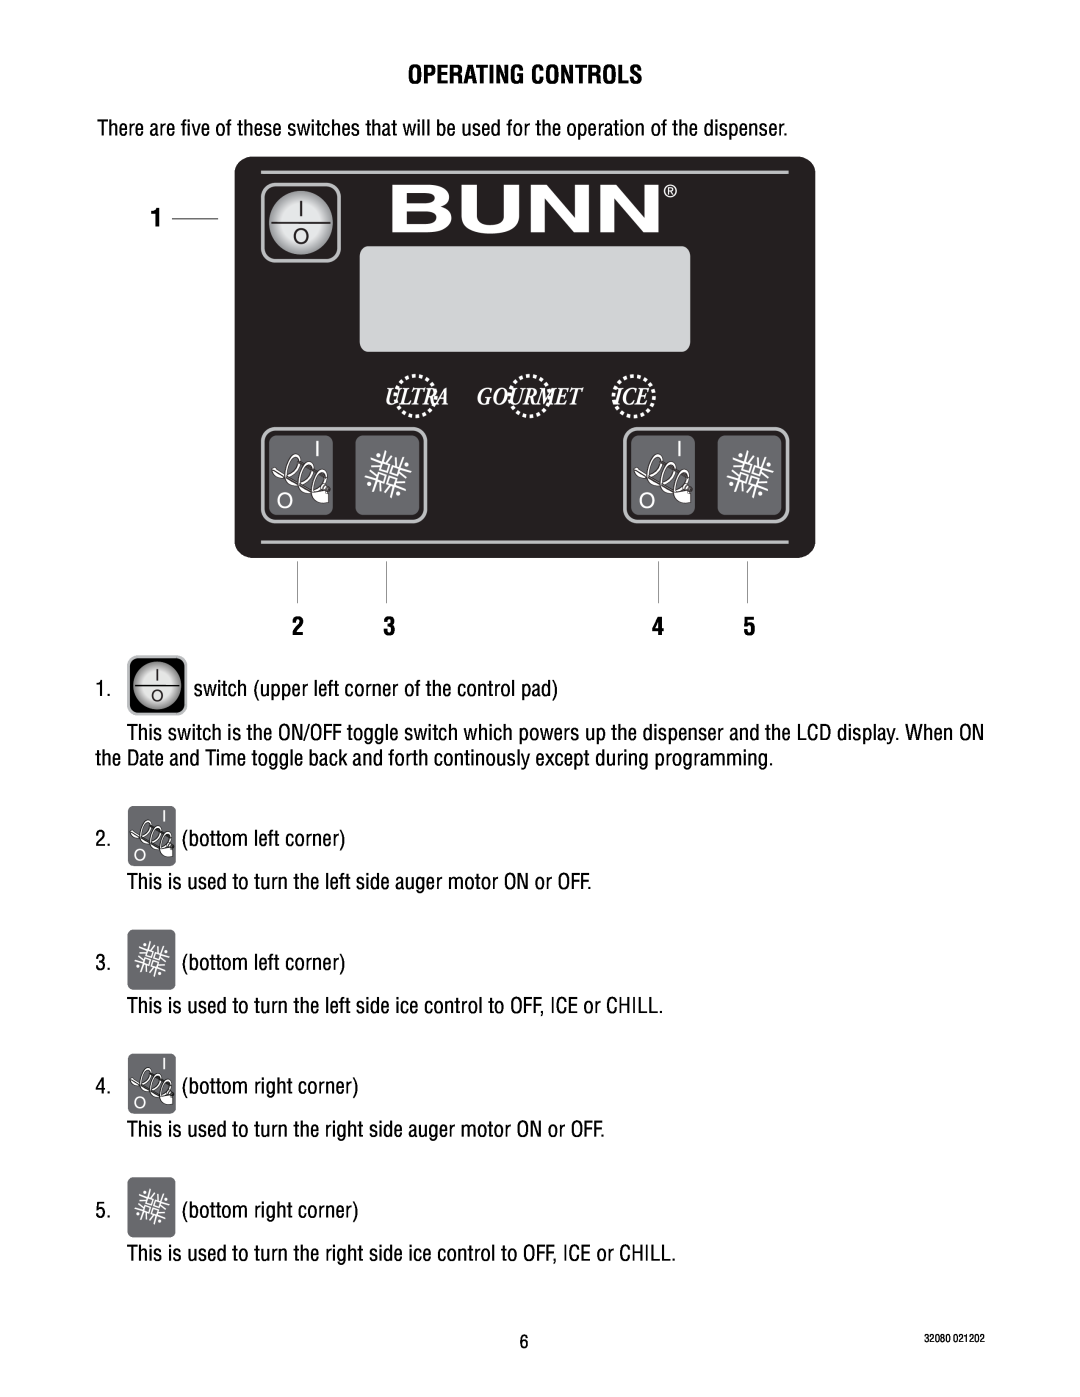 Bunn ULTRA-2 manual Operating Controls 